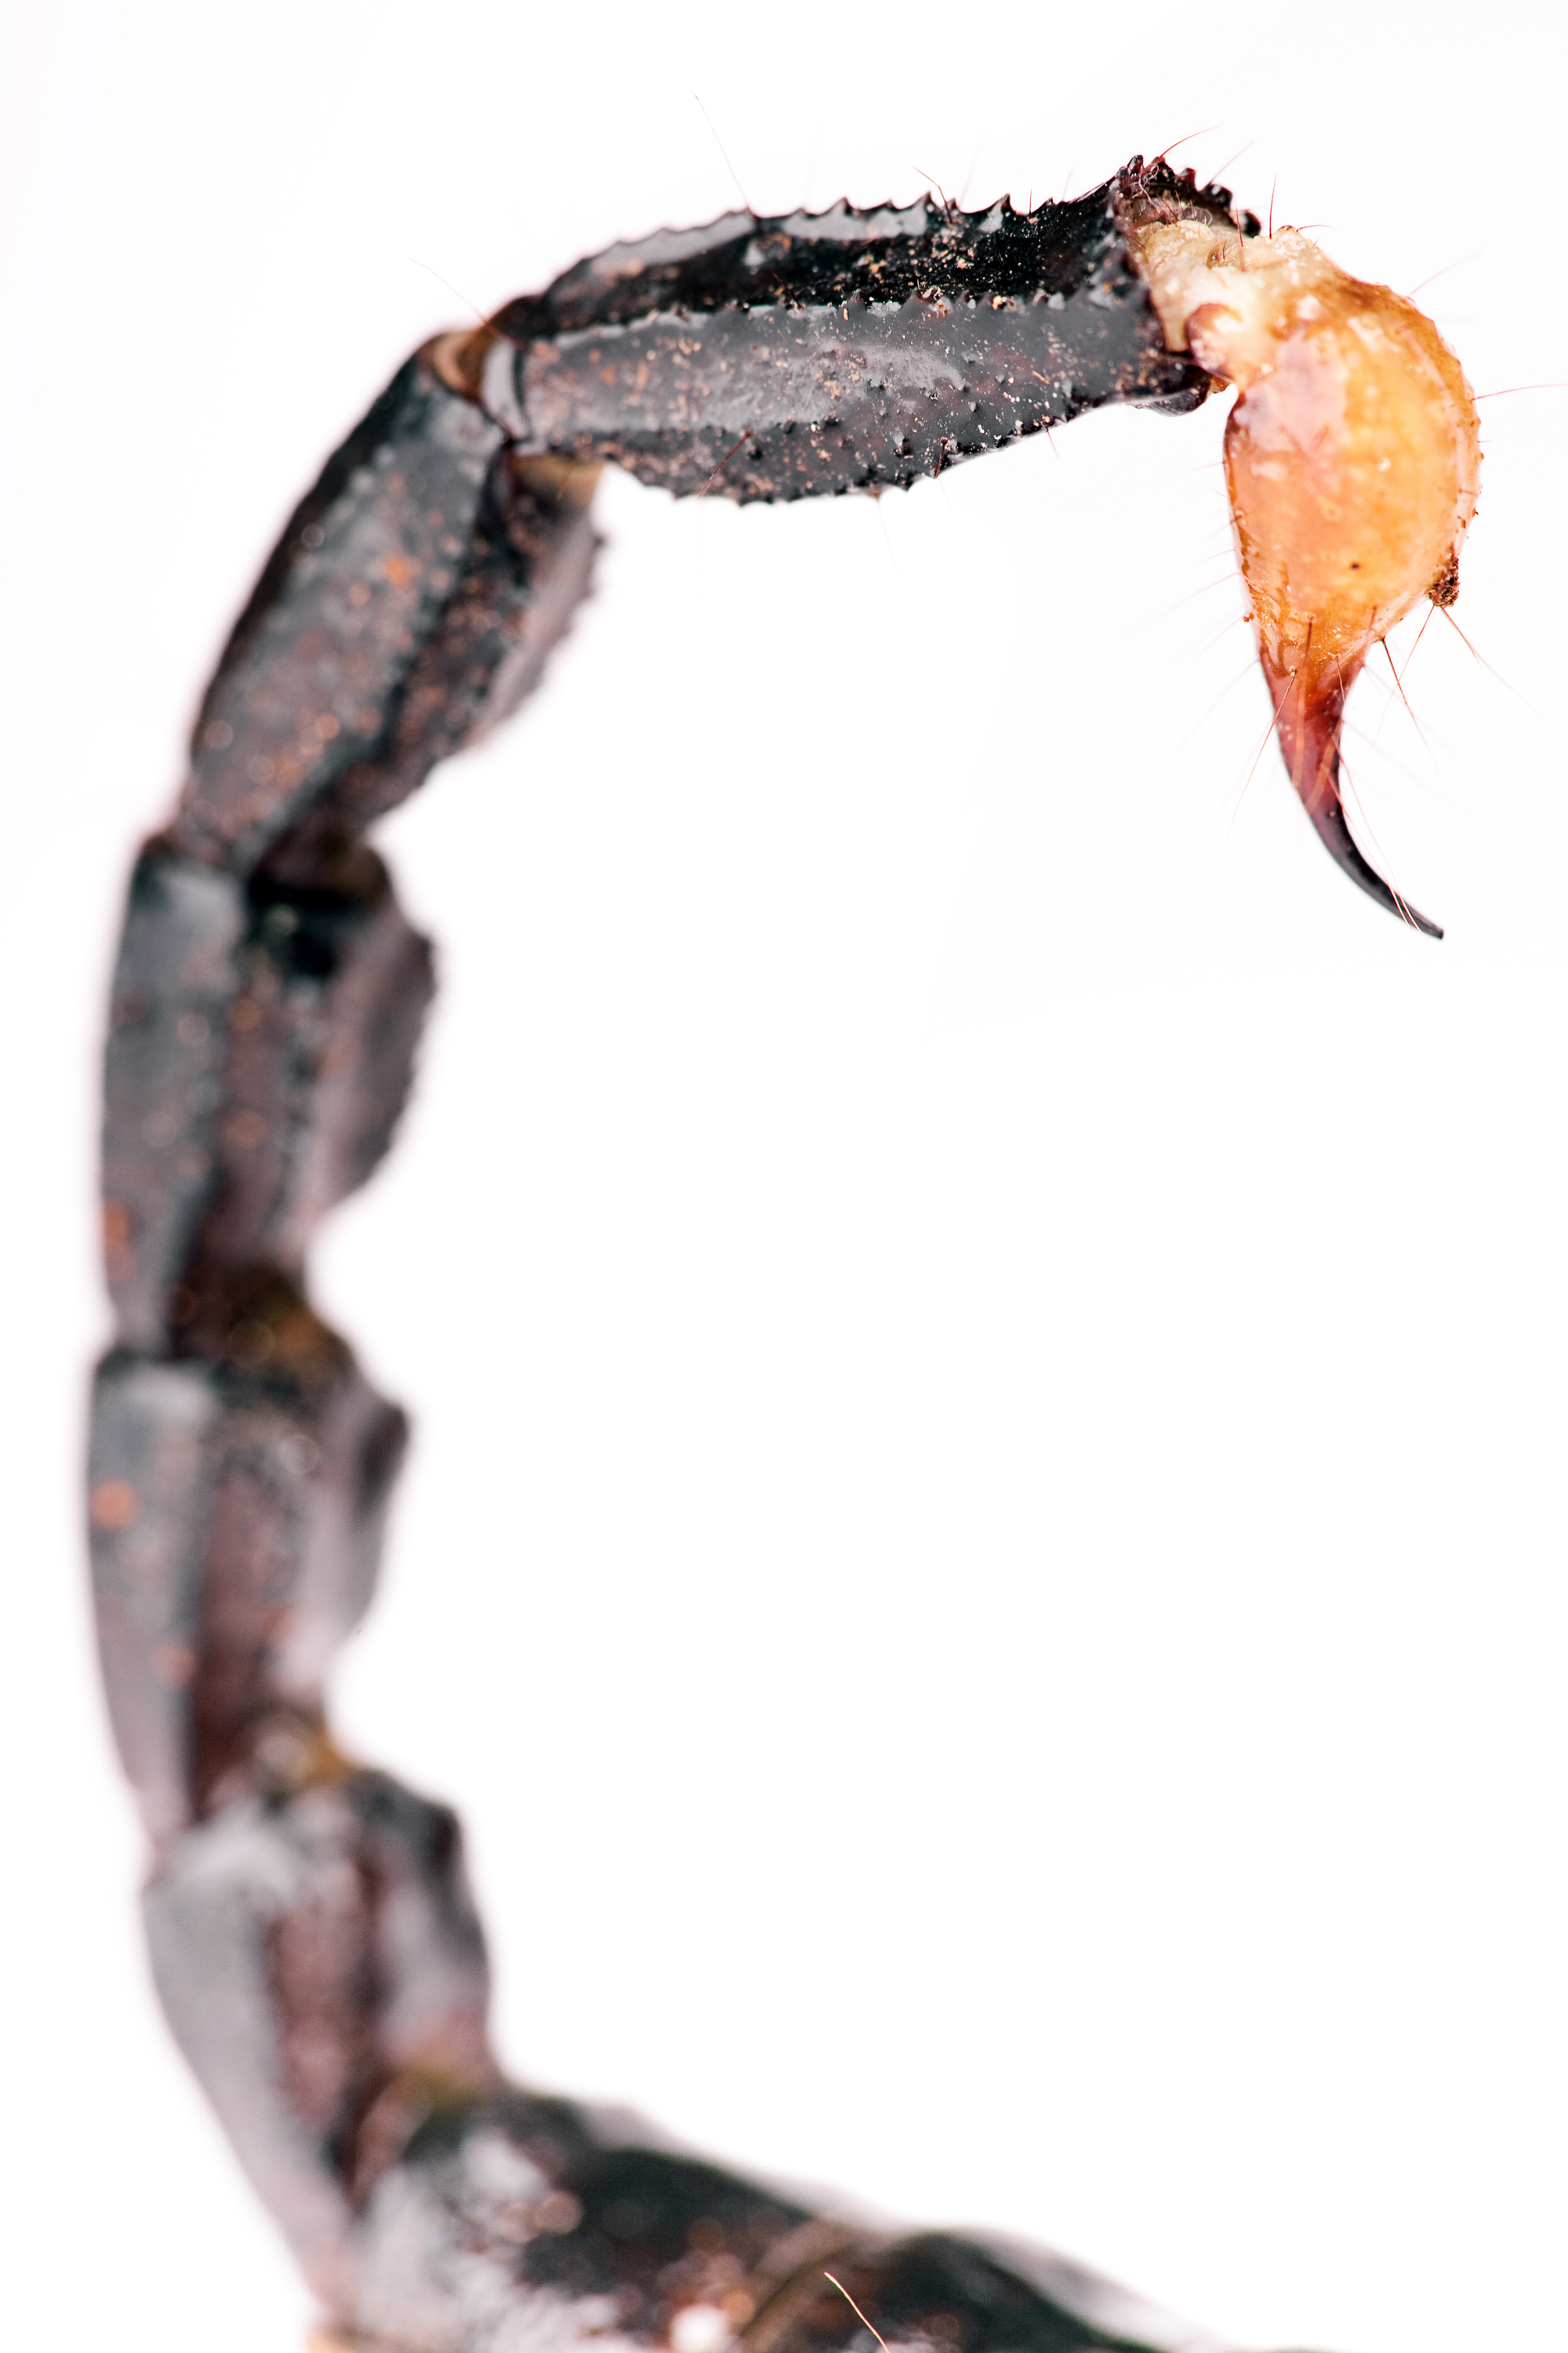 Scorpion tail photo